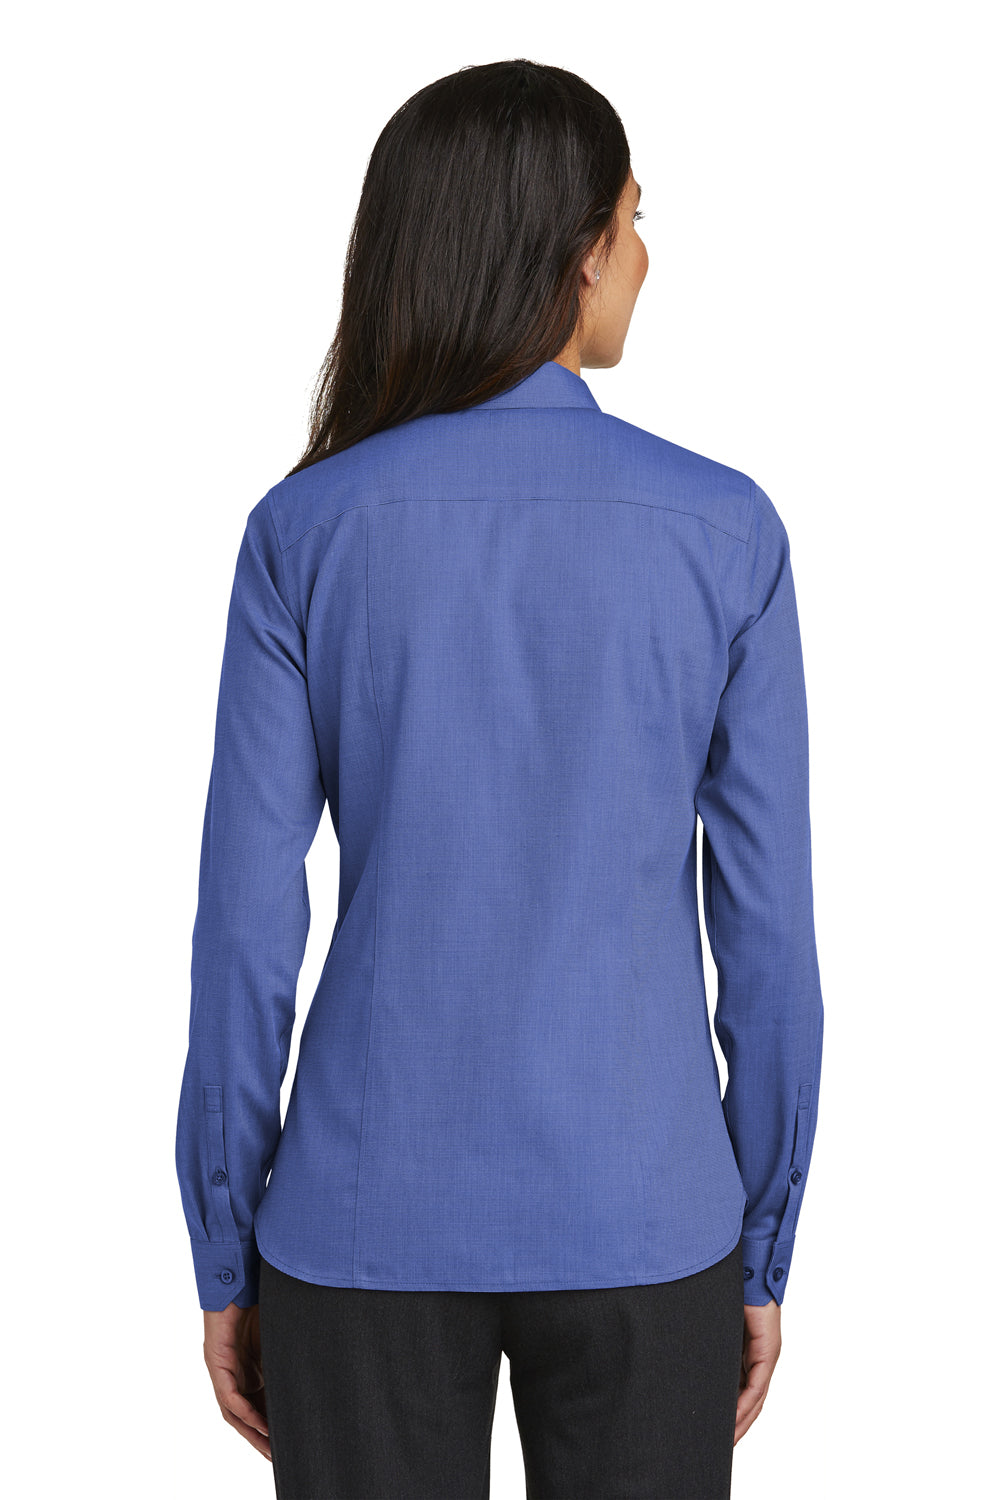 Red House RH470 Womens Nailhead Wrinkle Resistant Long Sleeve Button Down Shirt Mediterranean Blue Back